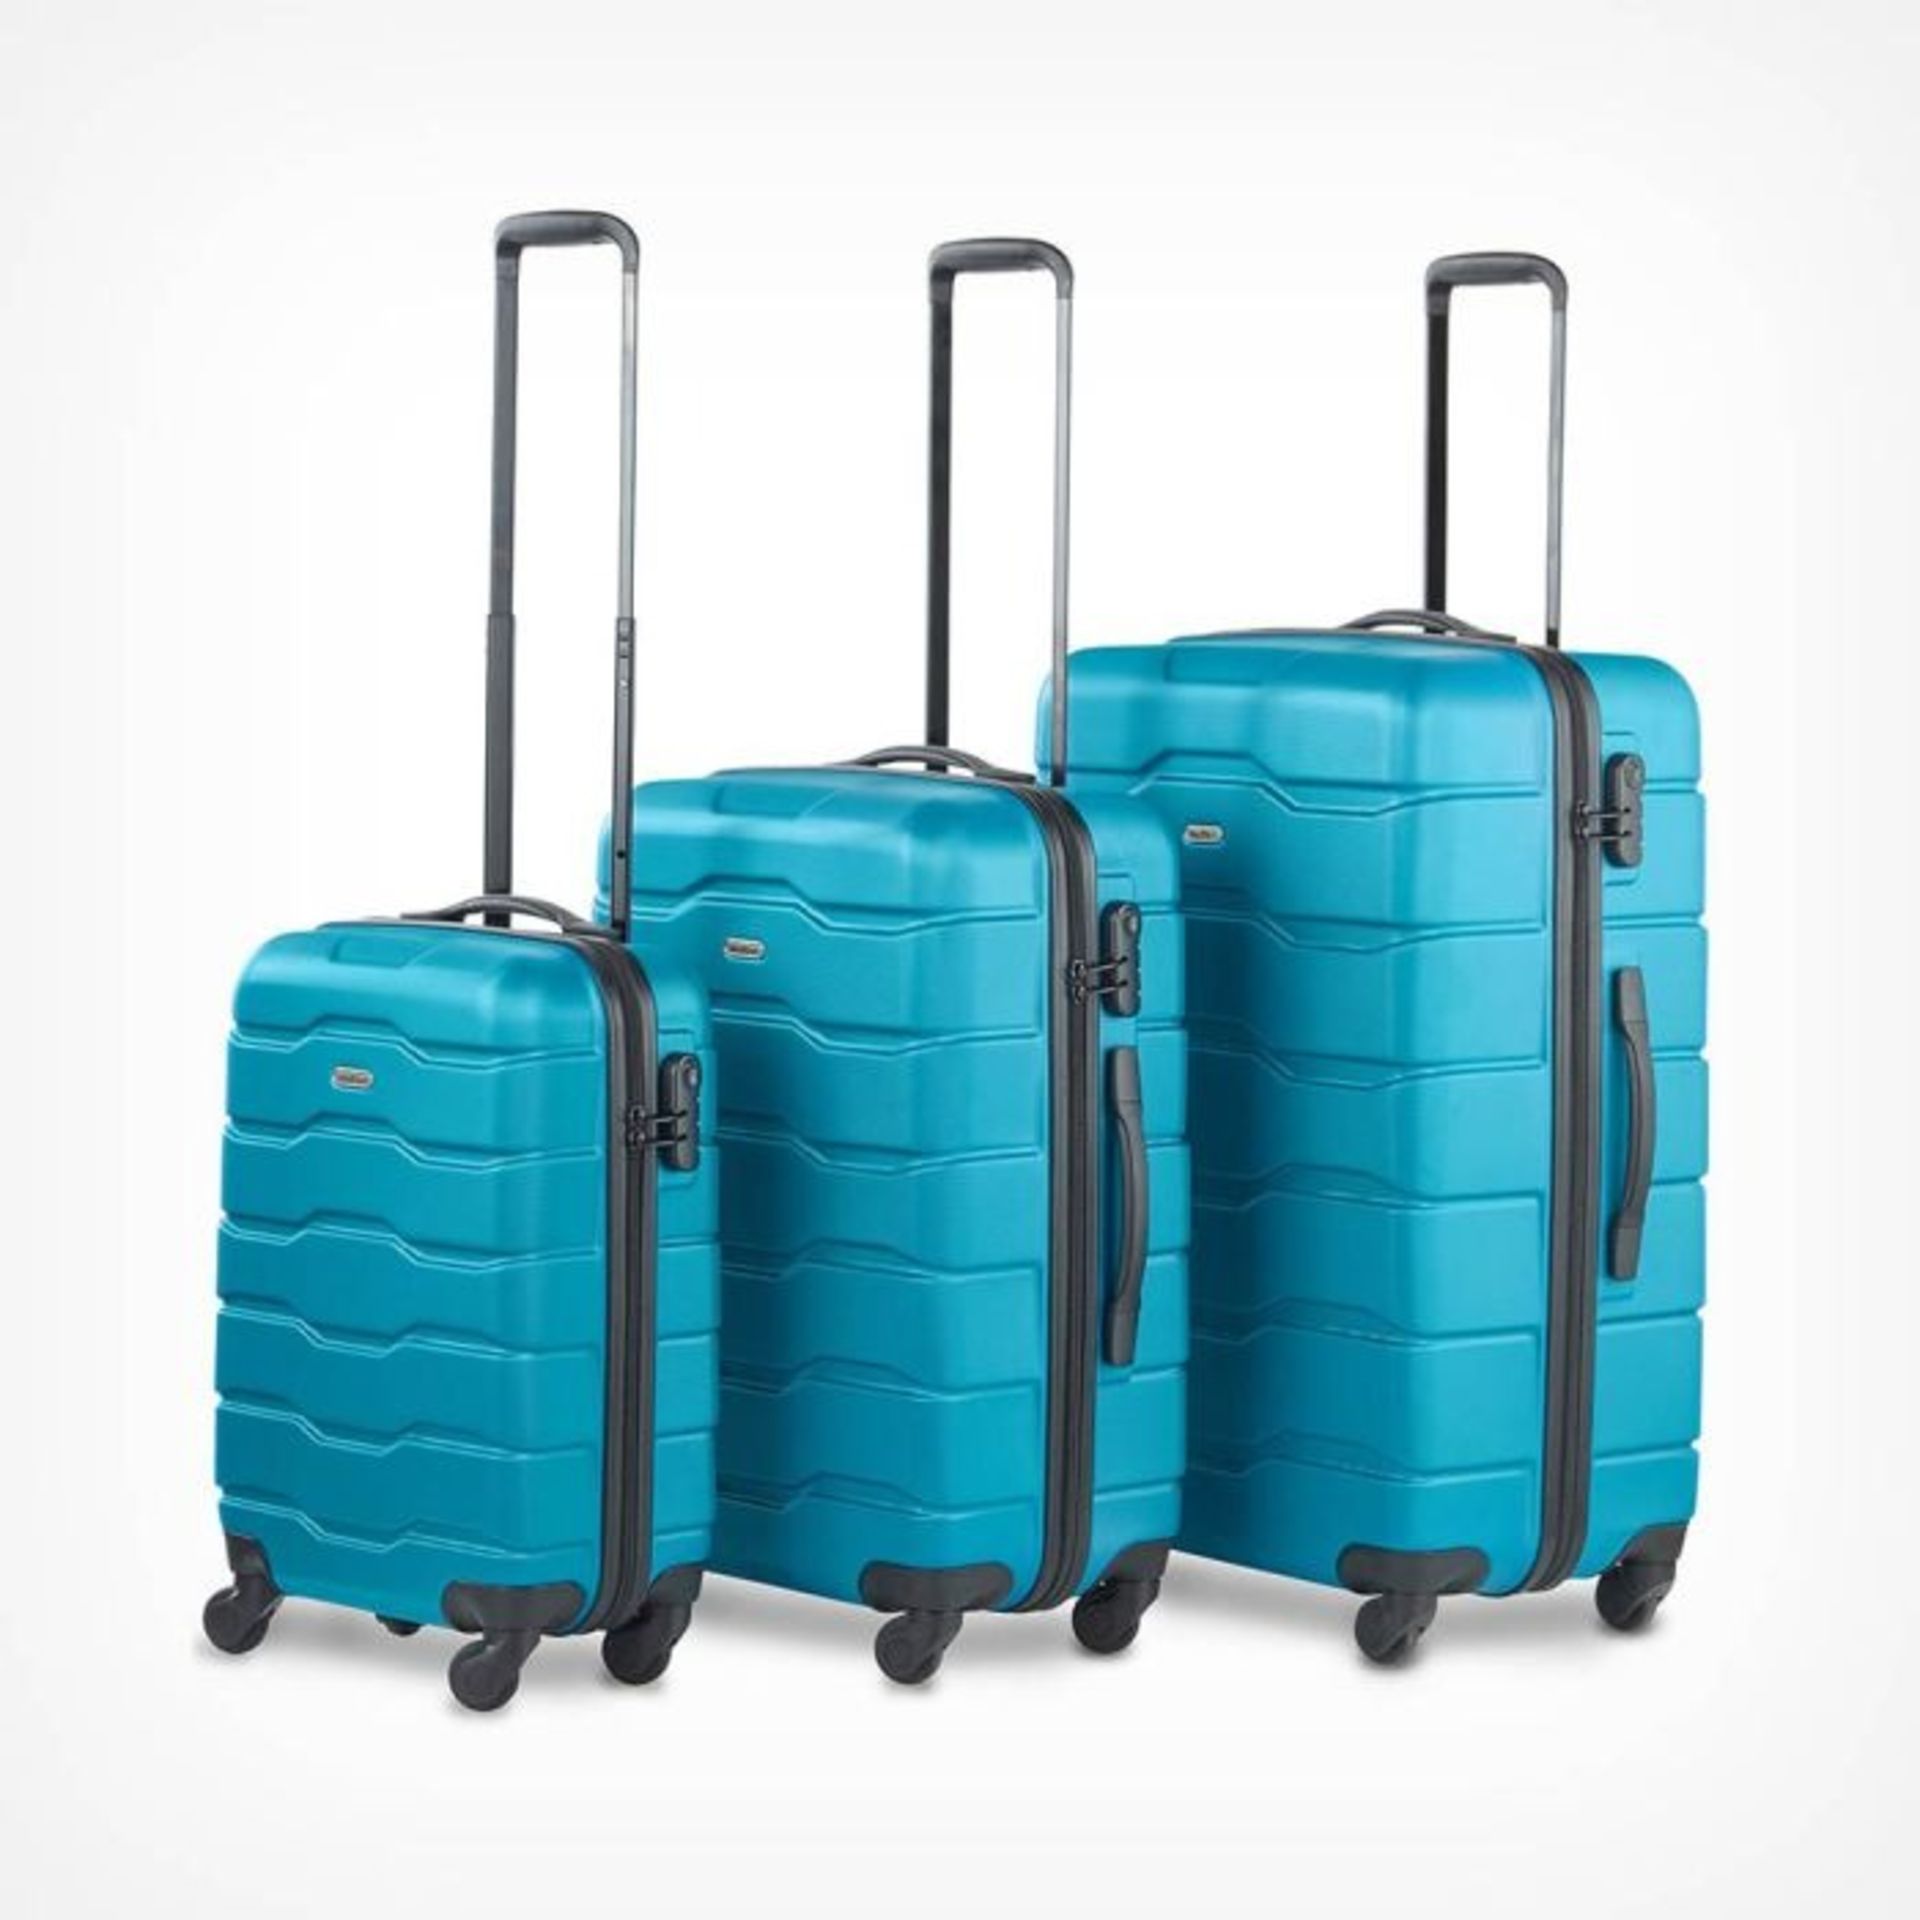 3pc ABS Teal Luggage Set - ER36